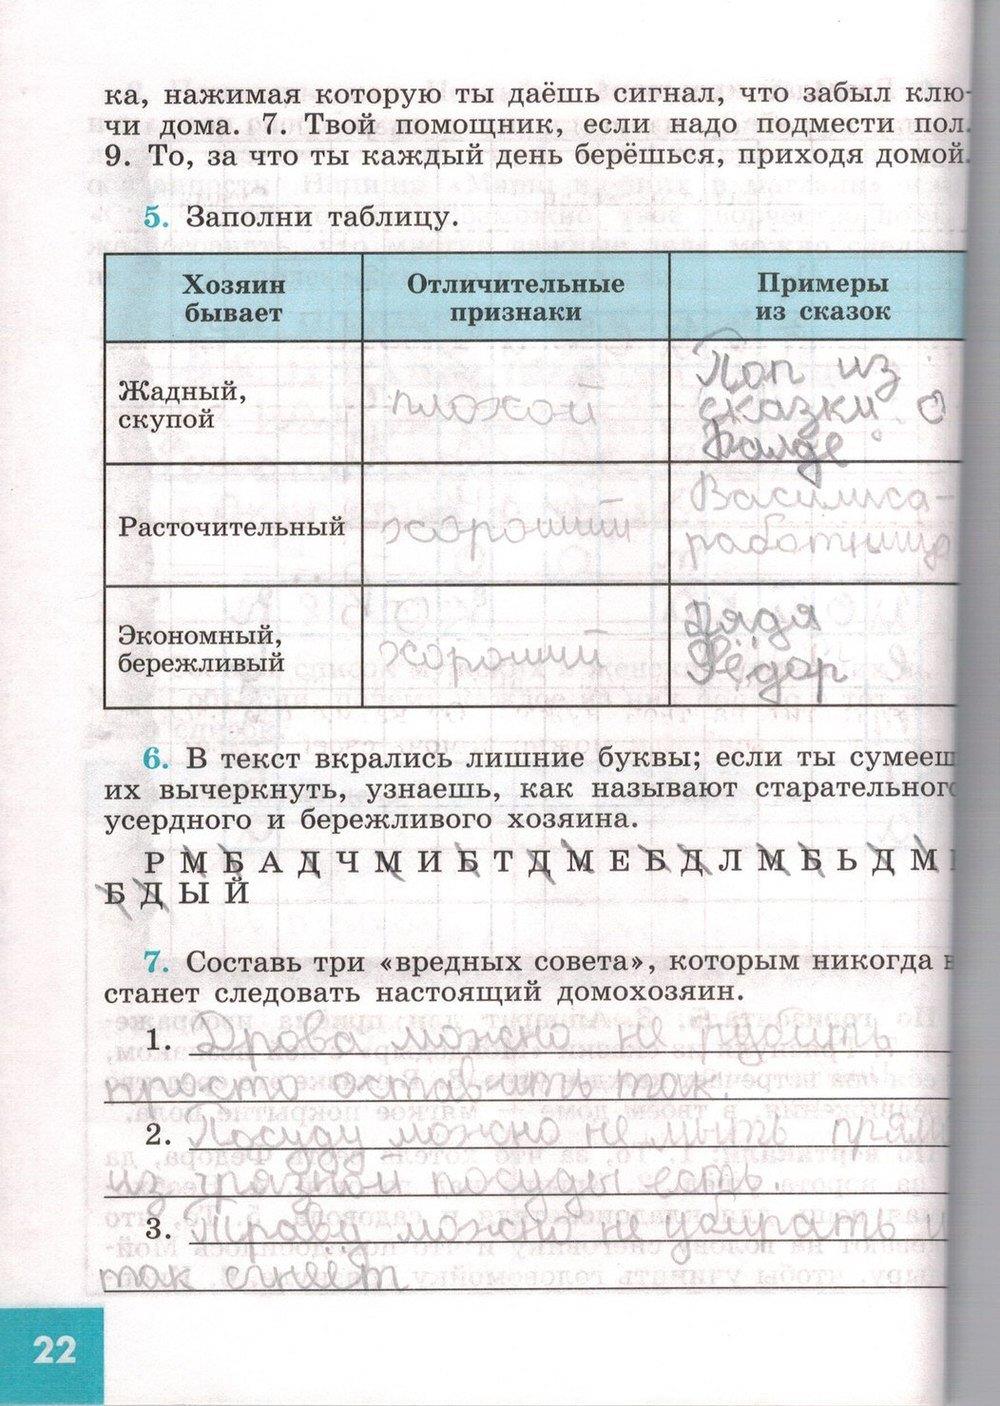 гдз 5 класс рабочая тетрадь страница 22 обществознание Иванова, Хотеенкова